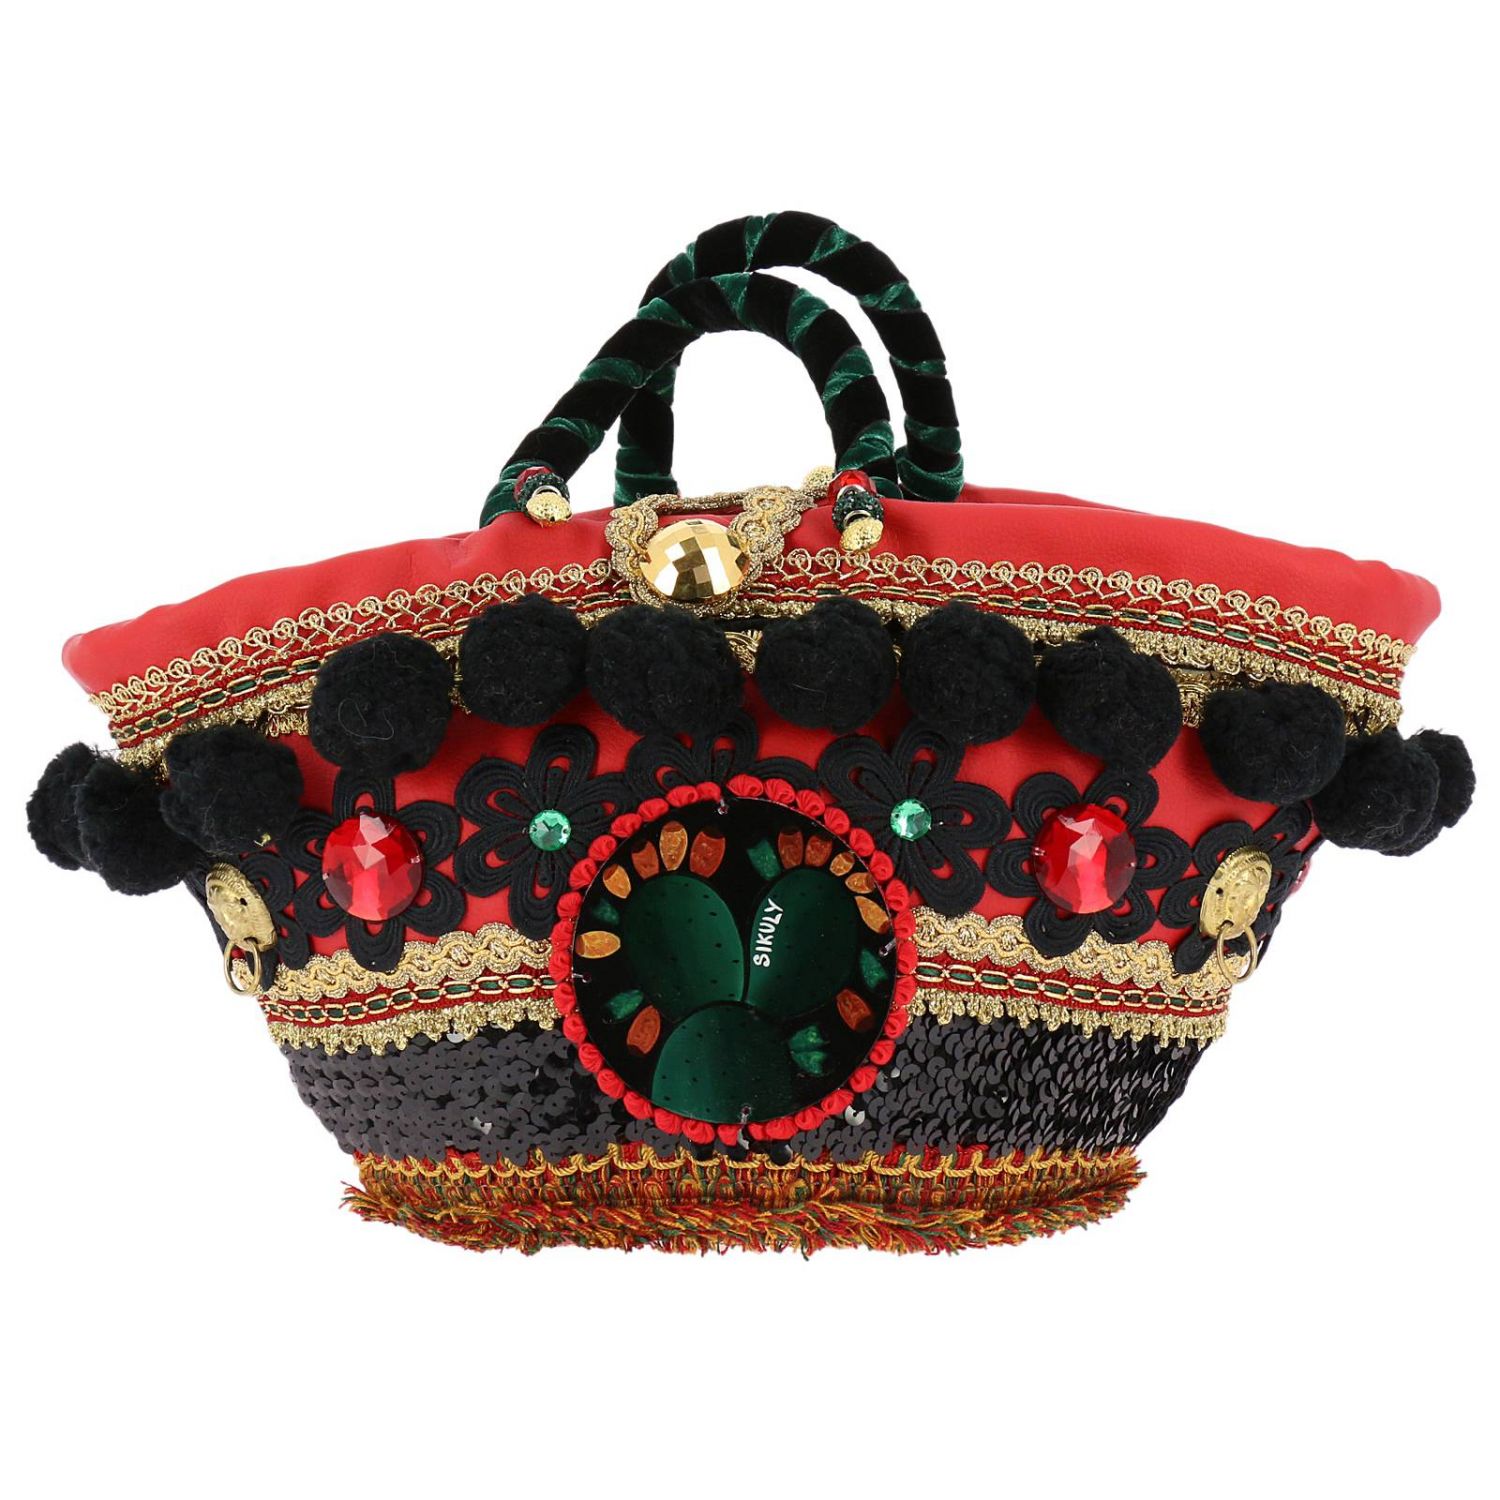 Sikuly Outlet: Shoulder bag women | Handbag Sikuly Women Red | Handbag ...